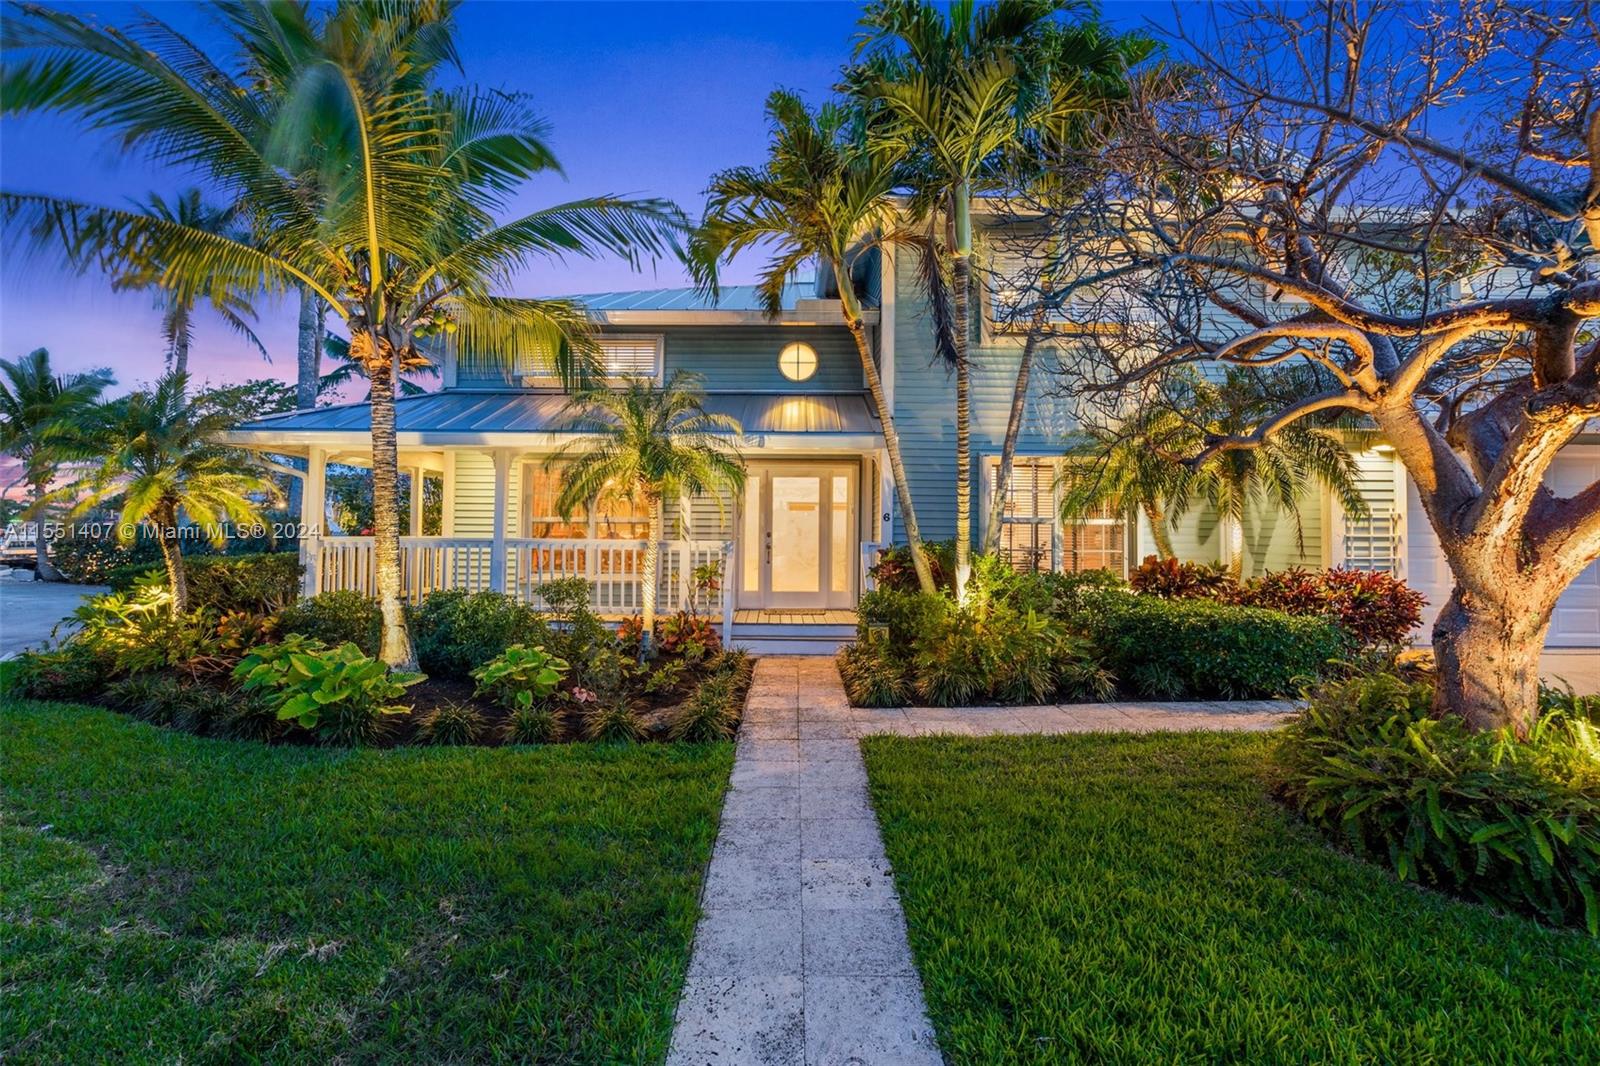 Property for Sale at 6 Kepner Dr, Boynton Beach, Palm Beach County, Florida - Bedrooms: 5 
Bathrooms: 4.5  - $3,100,000